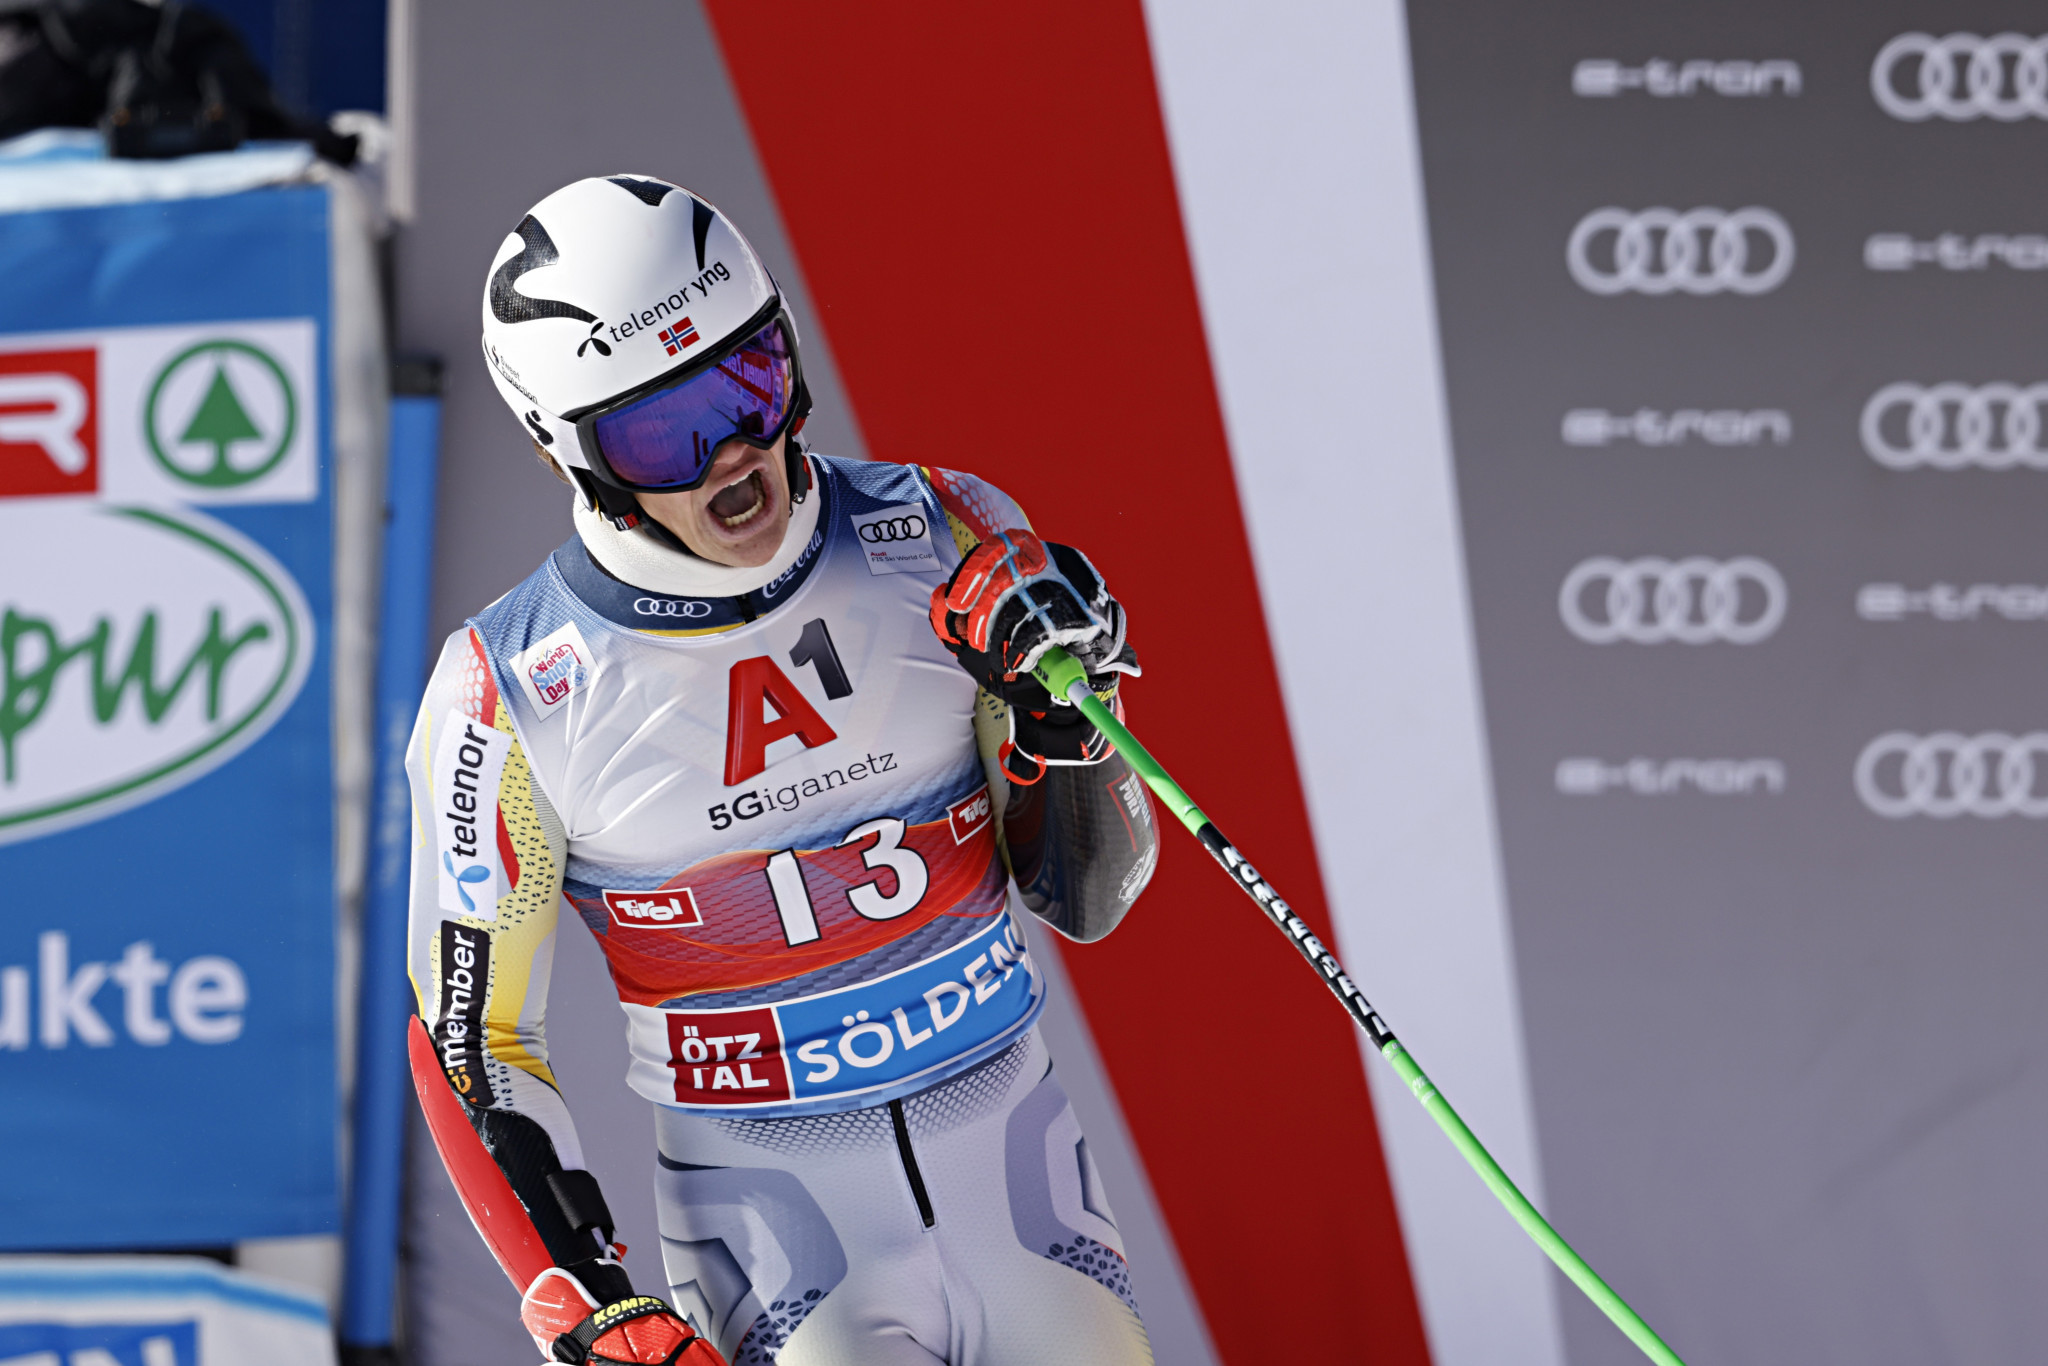 Stunning second run earns Braathen slalom victory at Alpine Ski World Cup in Wengen